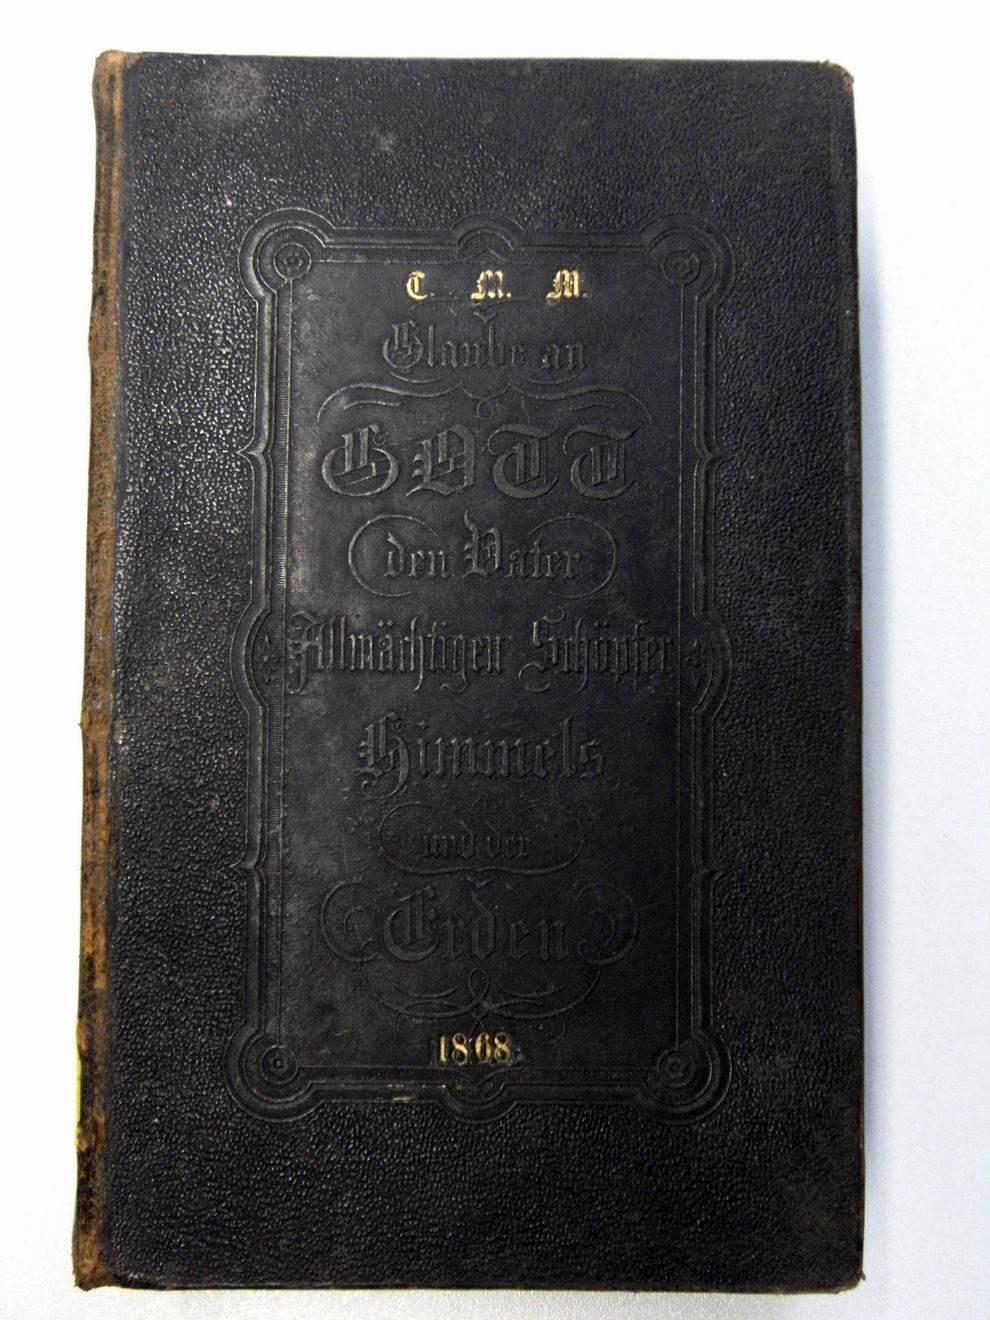 Gesangbuch, Faberscher Verlag 1866 (Börde-Museum Burg Ummendorf RR-F)